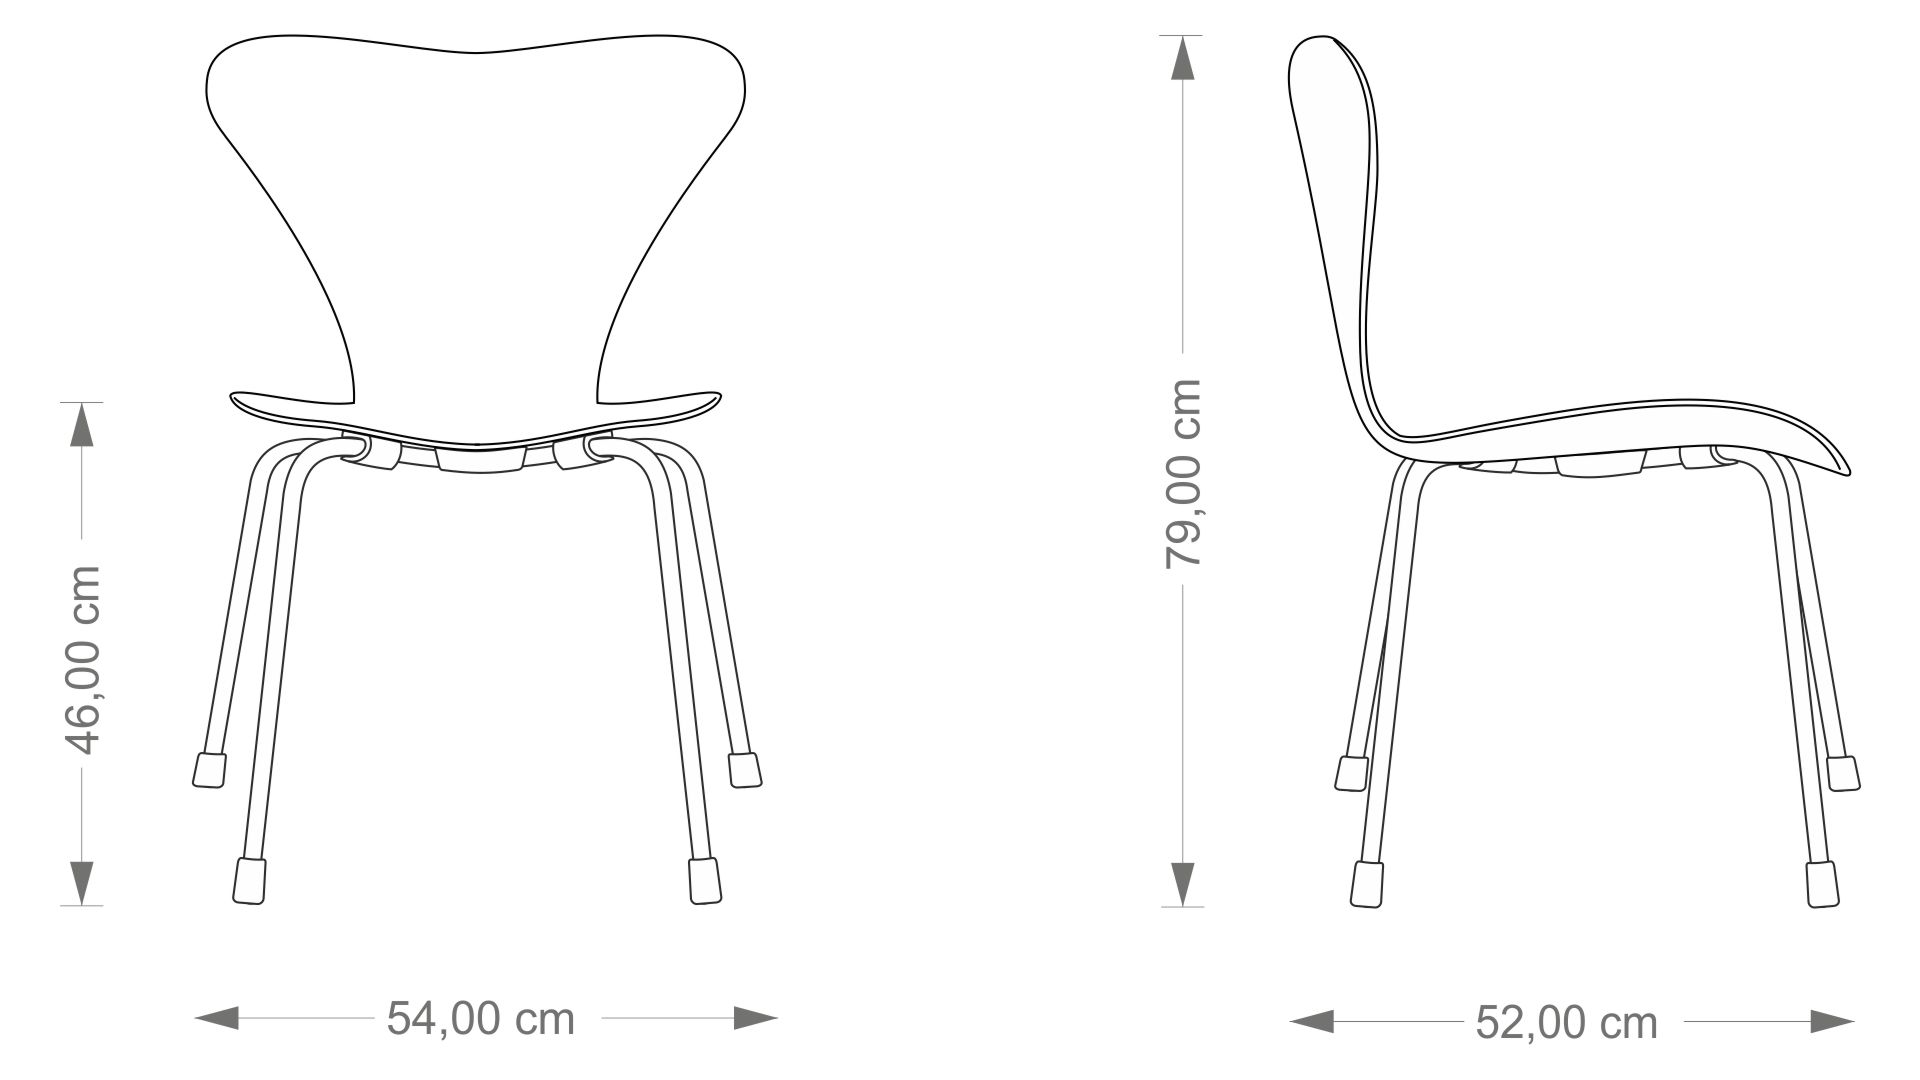 Arne Jacobsen Chair 3107